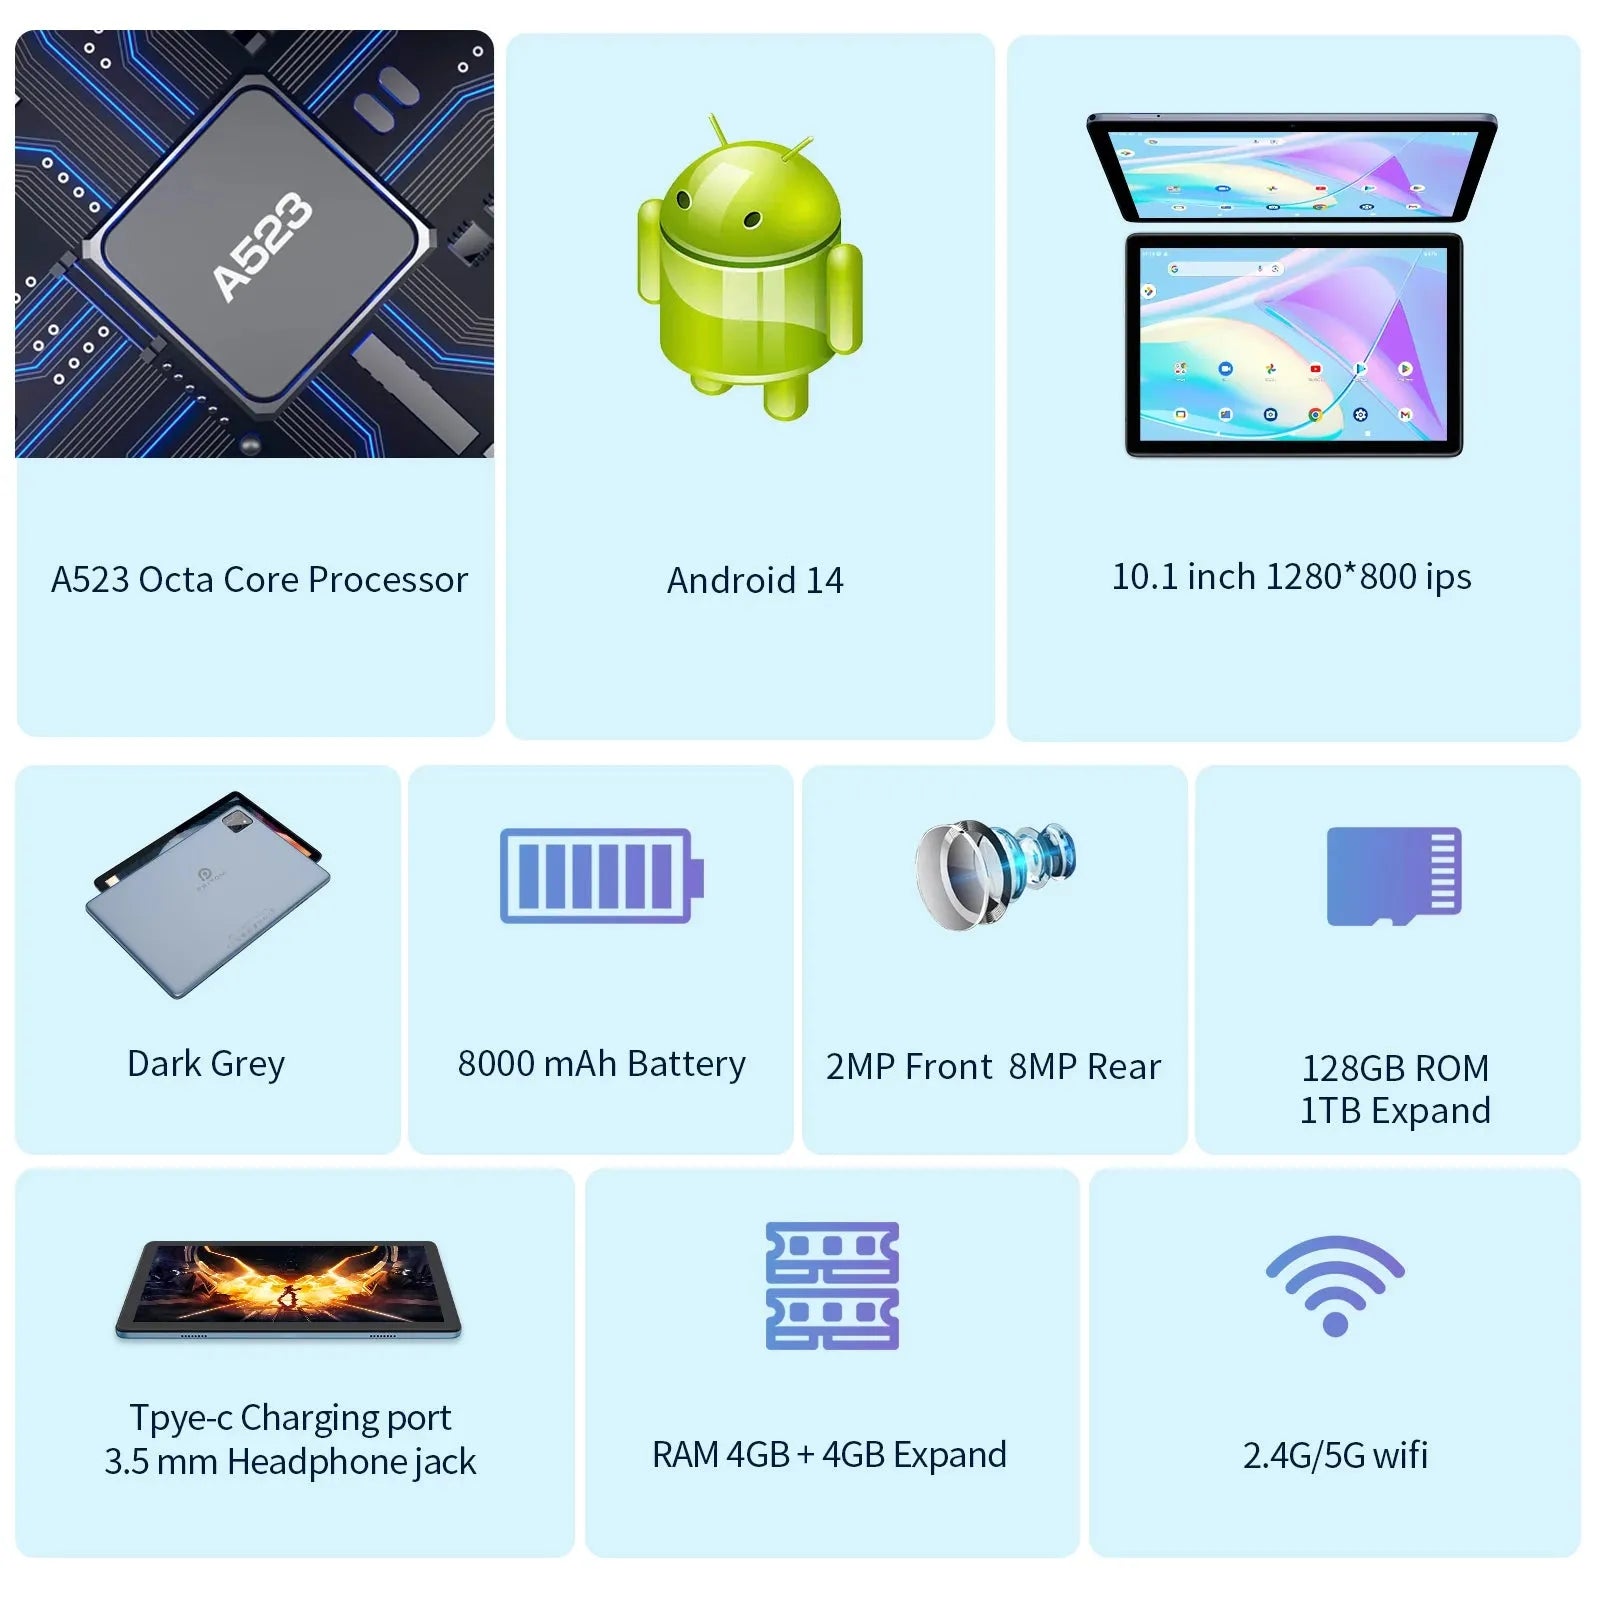 PRITOM TAB11 Android 14 Tablet, 10 Inch, Octa-Core, 5G WiFi6, 128GB, 8000mAh, HD IPS Display, Dual Camera, Bluetooth, FM, TYPE C